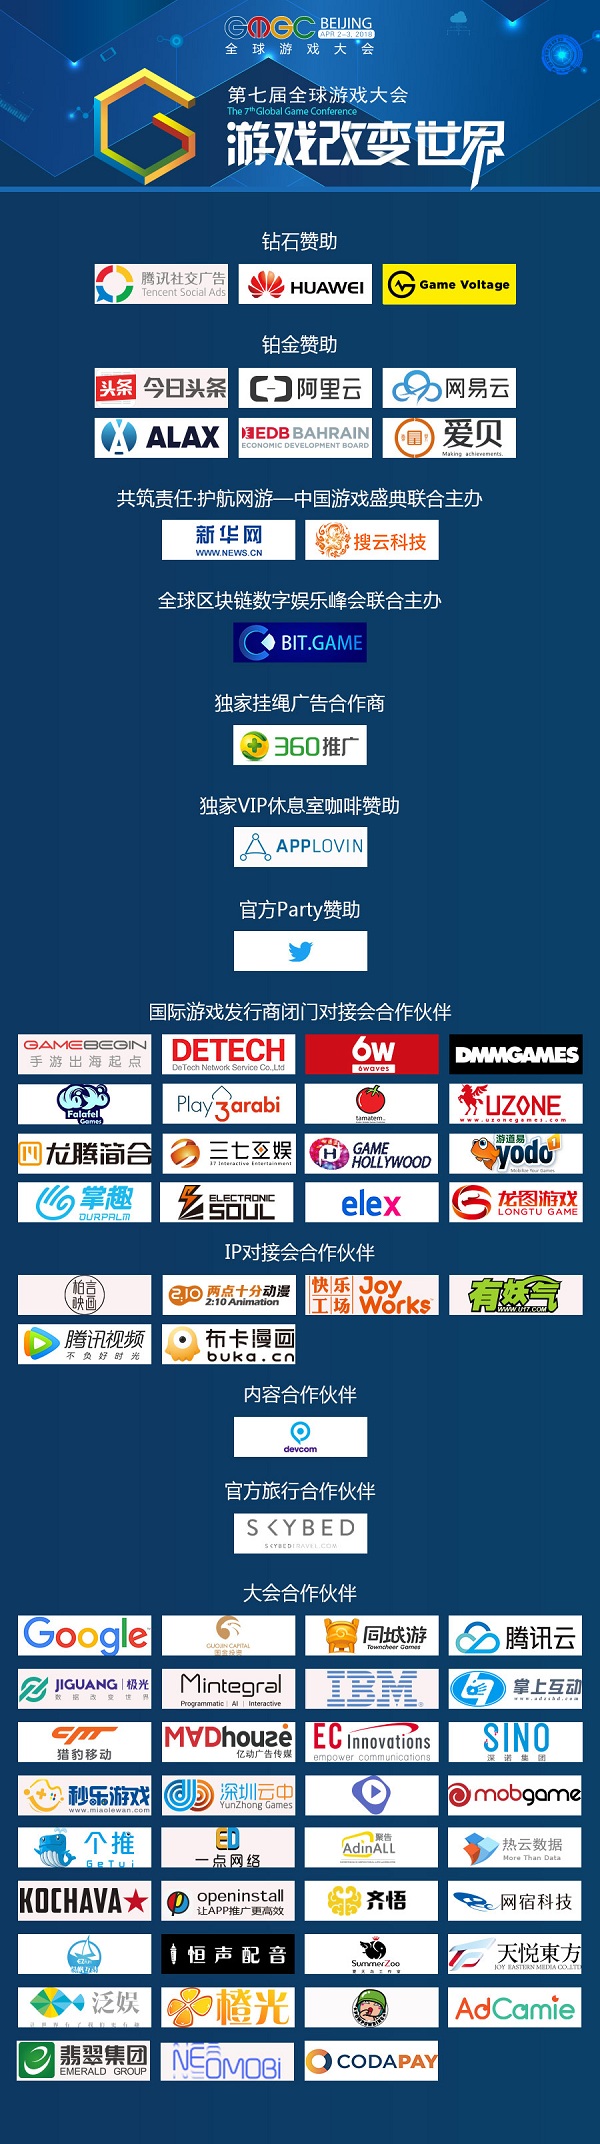 GMGC北京2018|第七届全球游戏大会参会指南+媒体阵容!